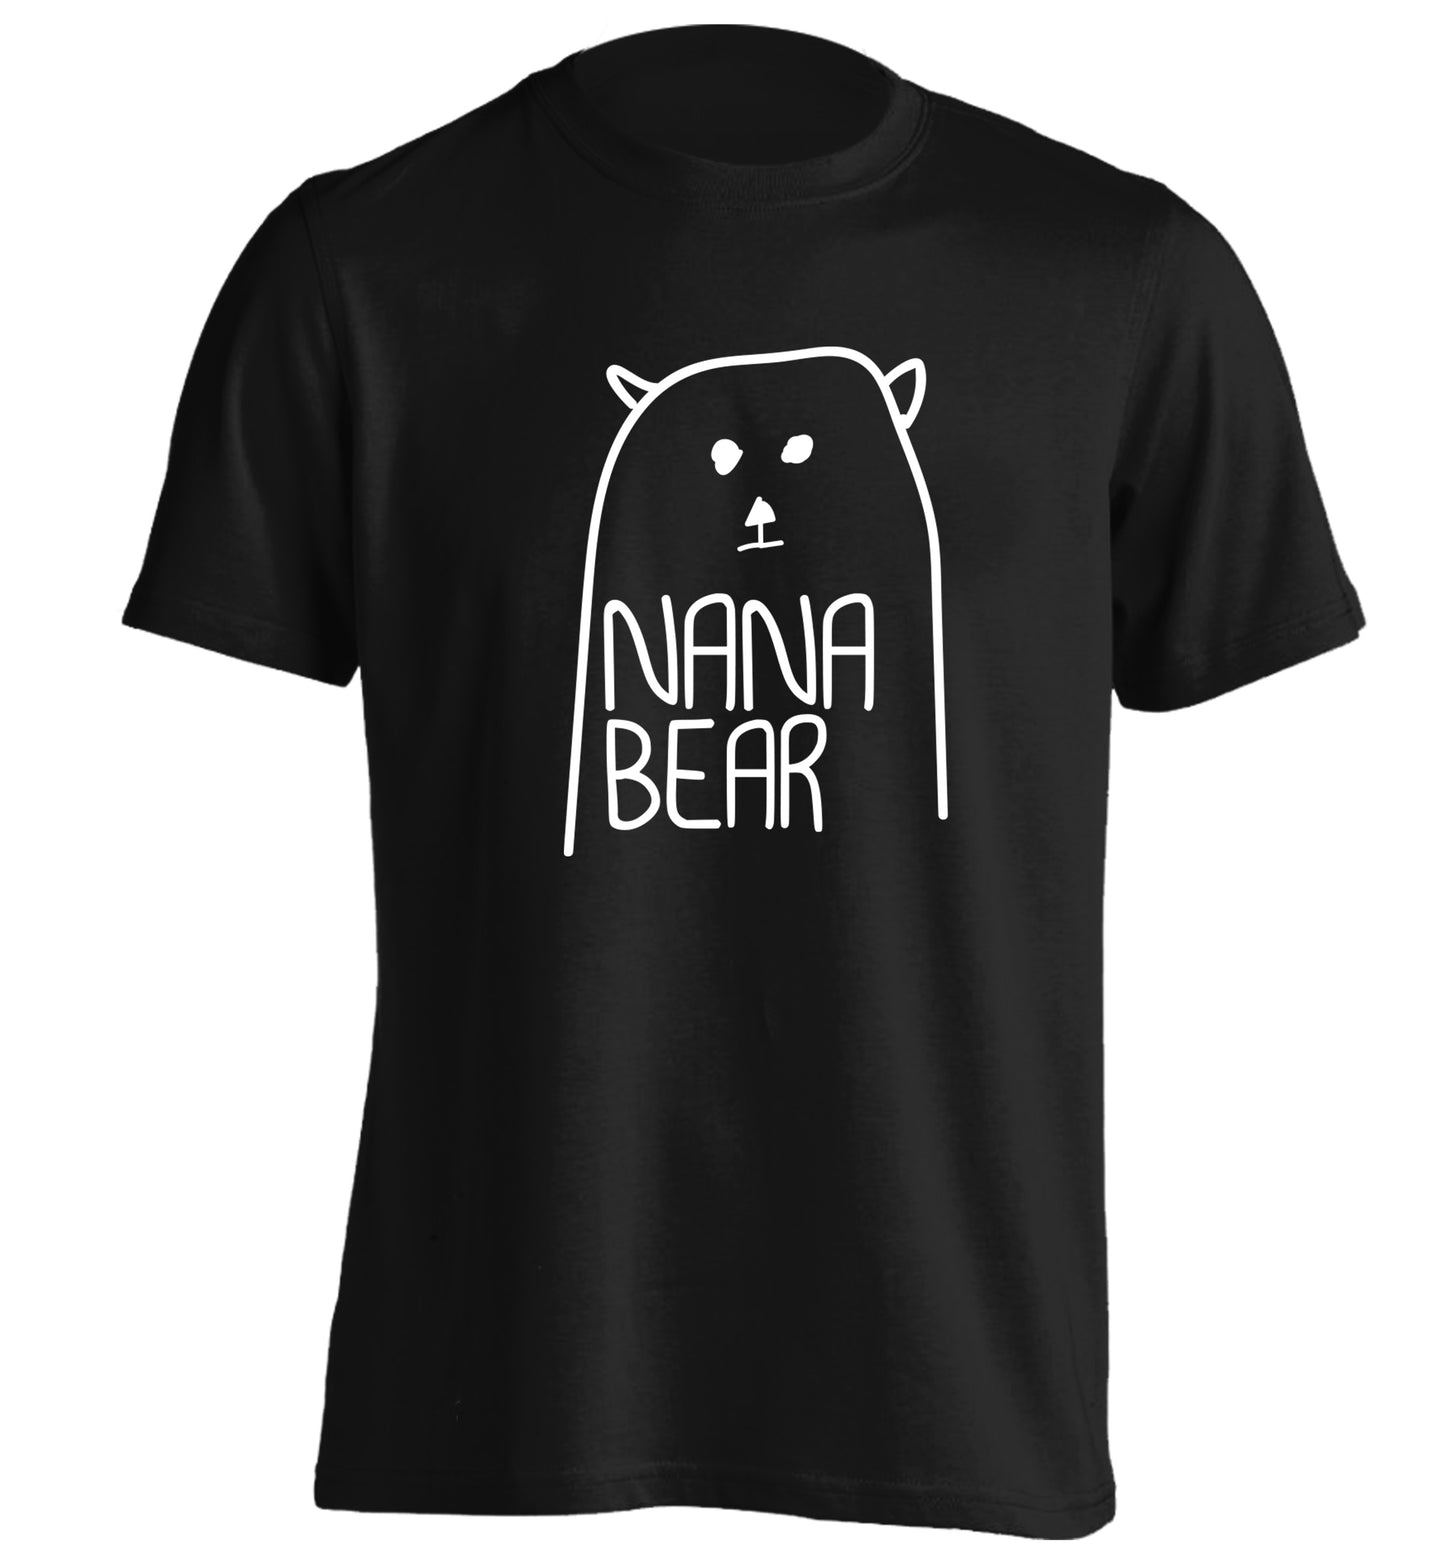 Nana bear adults unisex black Tshirt 2XL